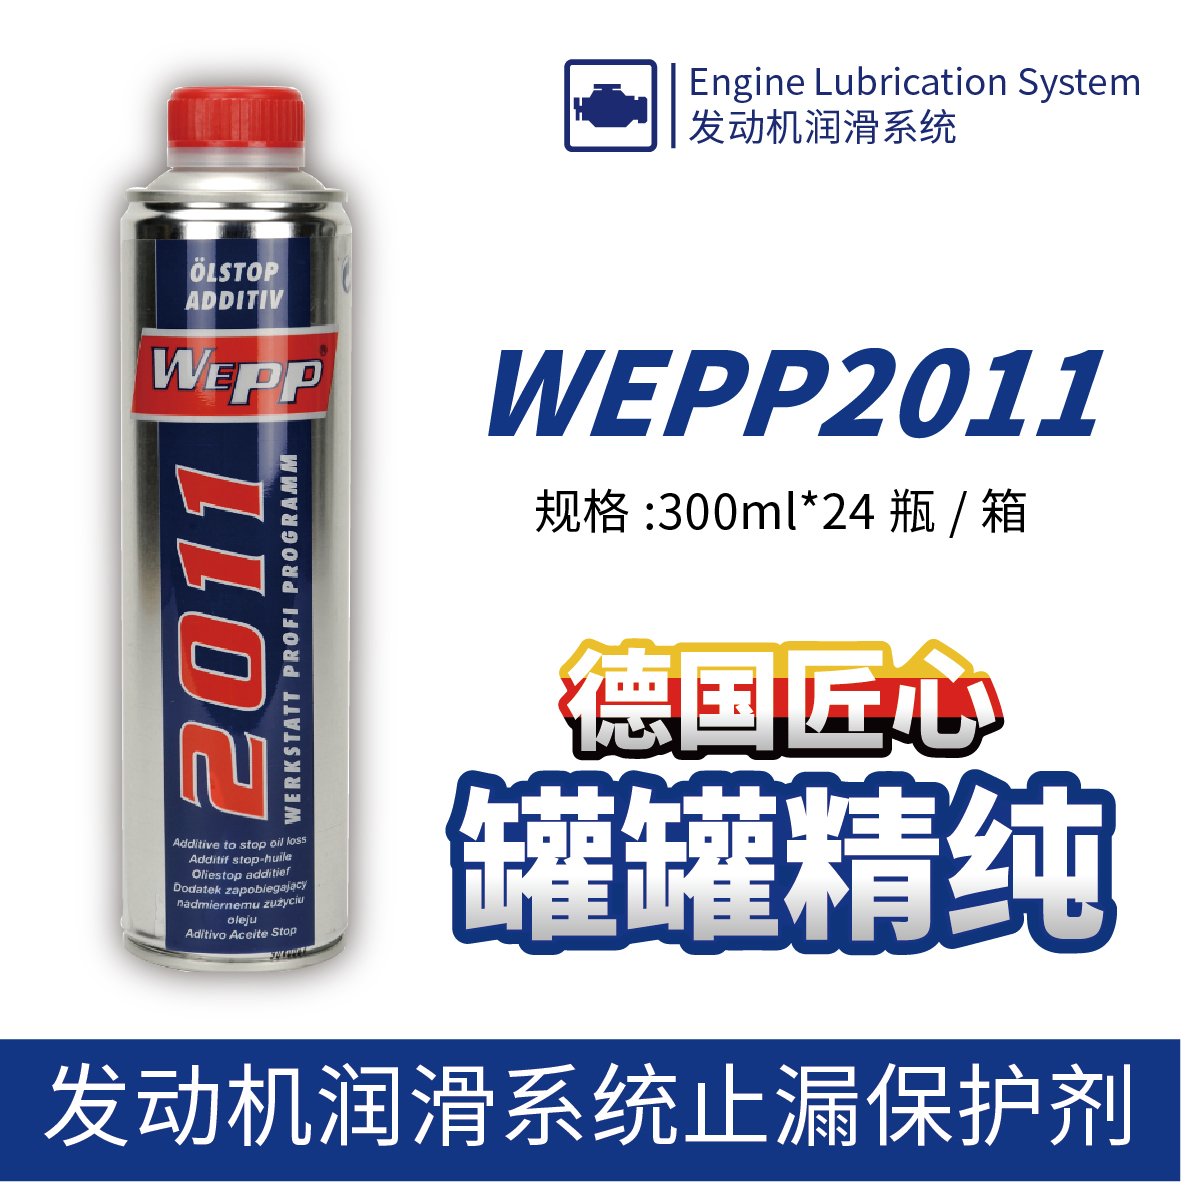 WEPP2011 发动机润滑系统止漏保护剂